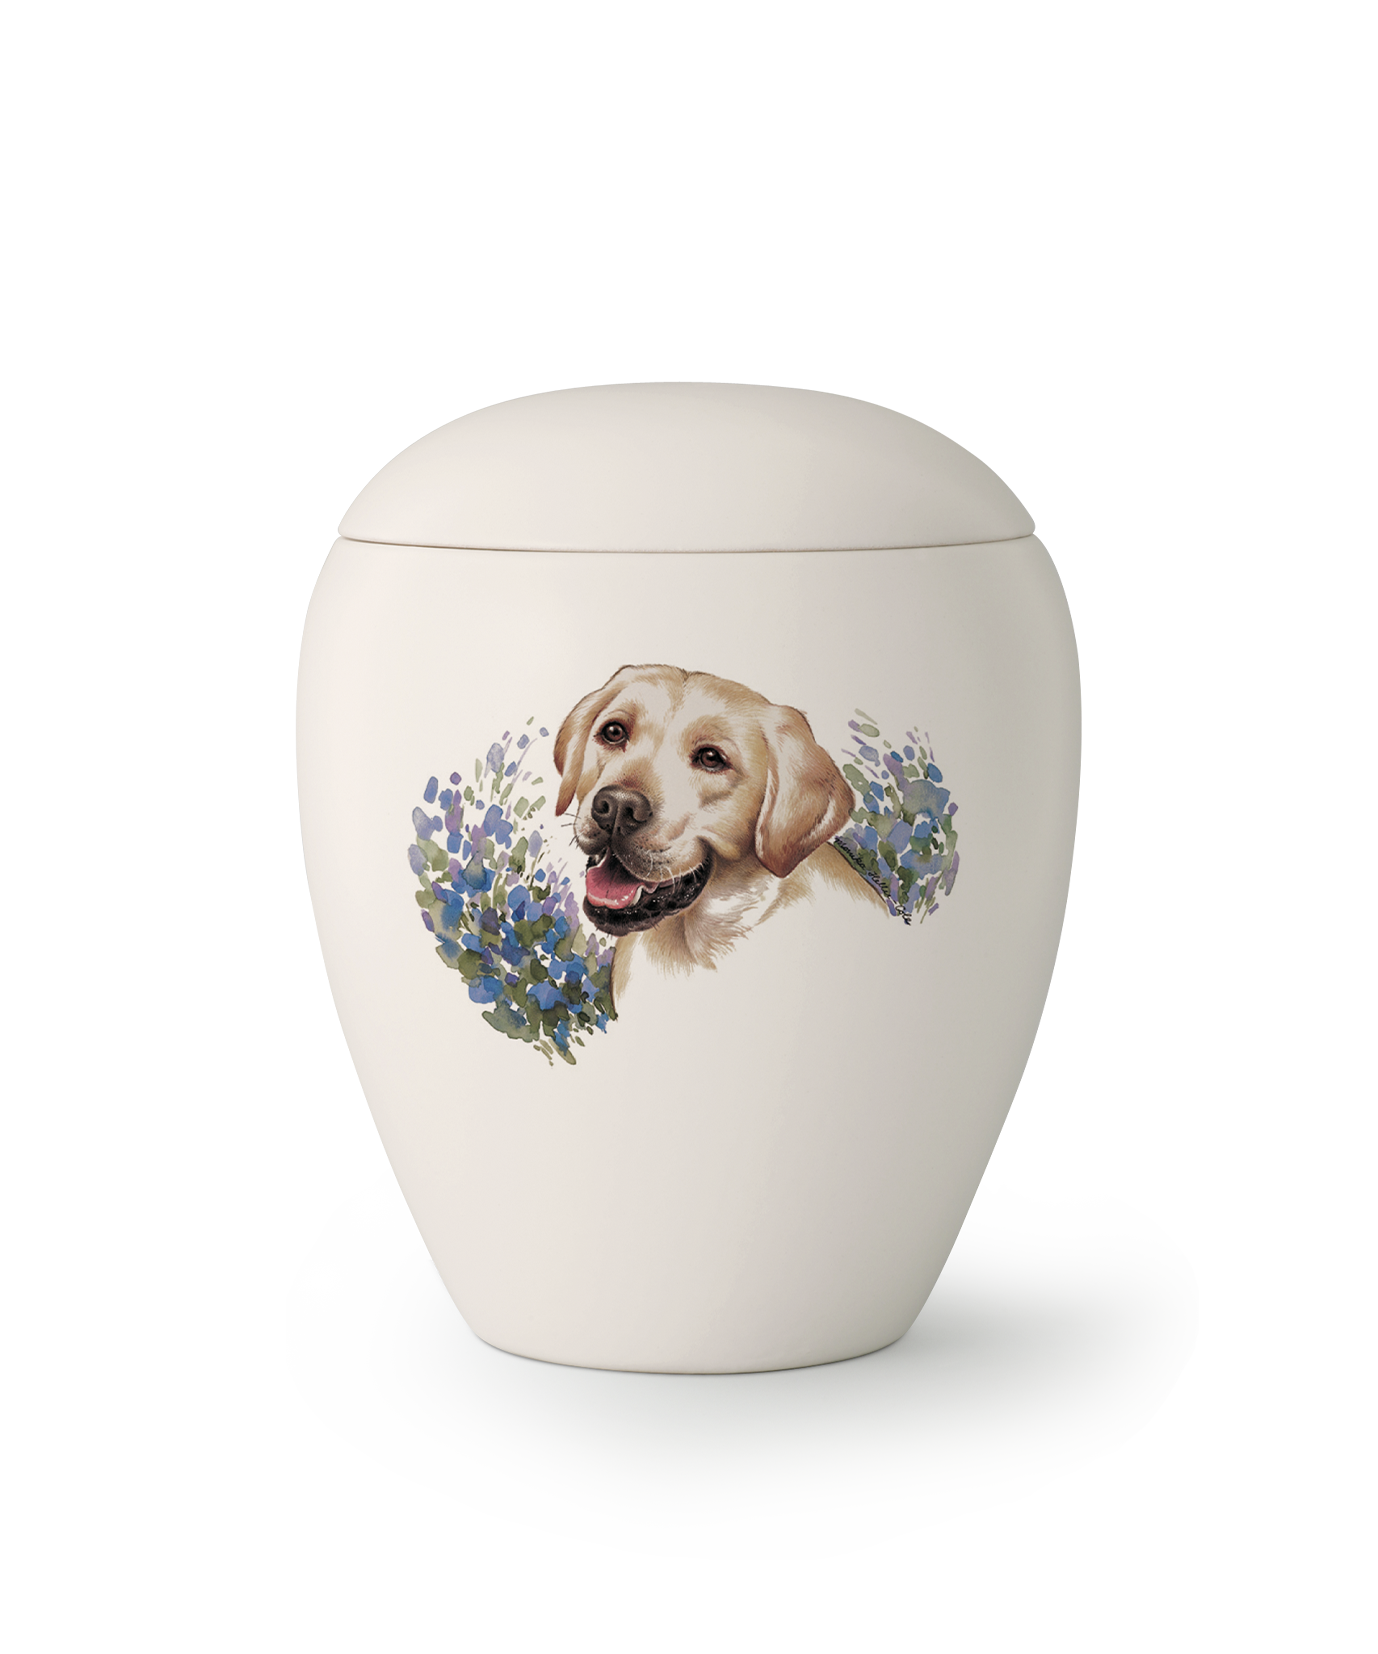 Tierurne - Keramik Hund "Labrador" 2800ml